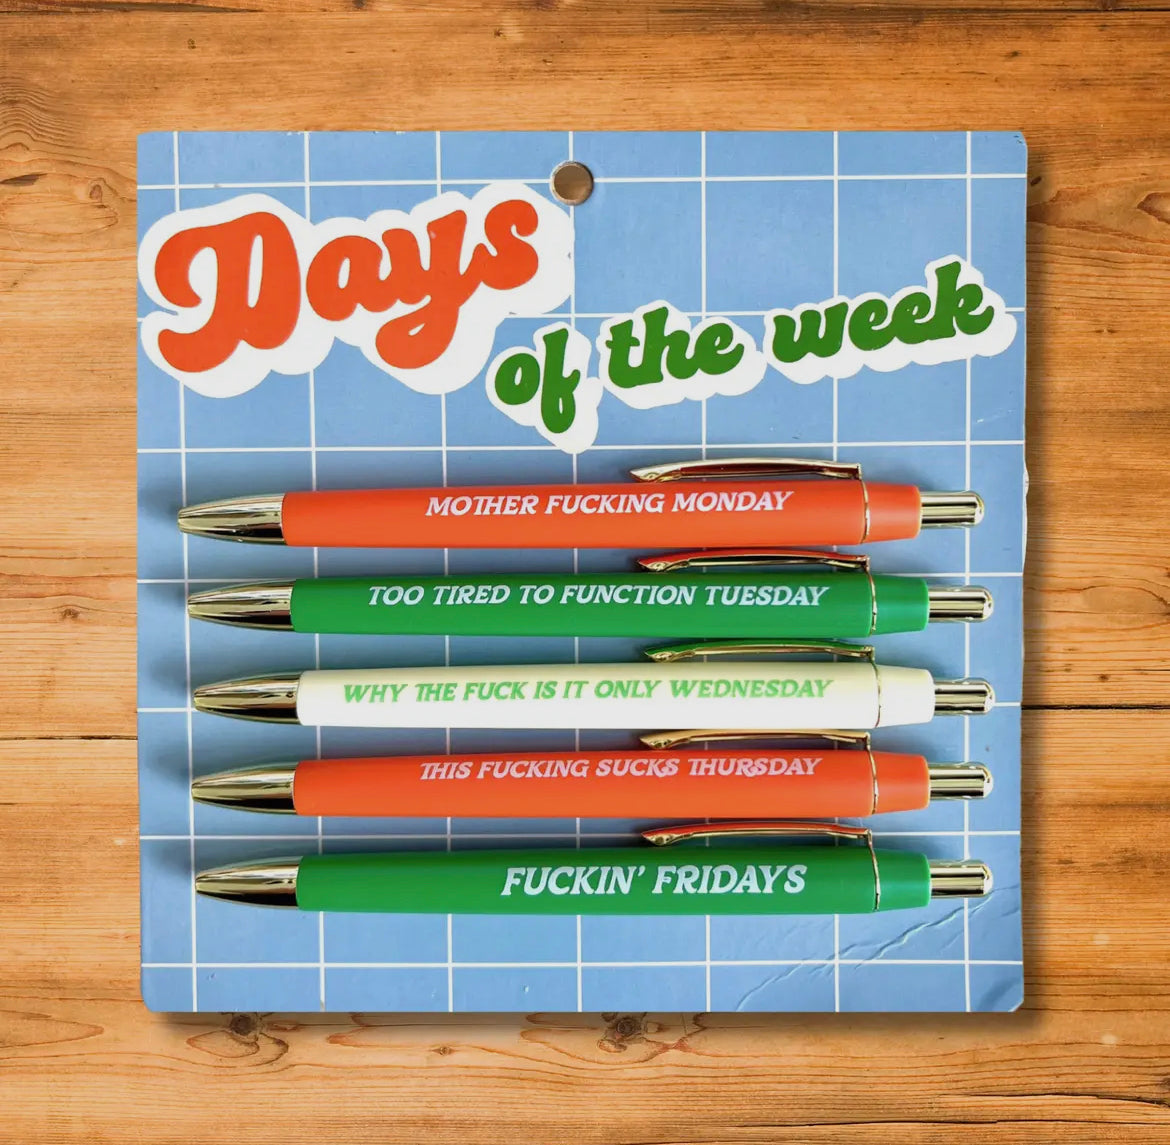 Days of the Week Pen Set